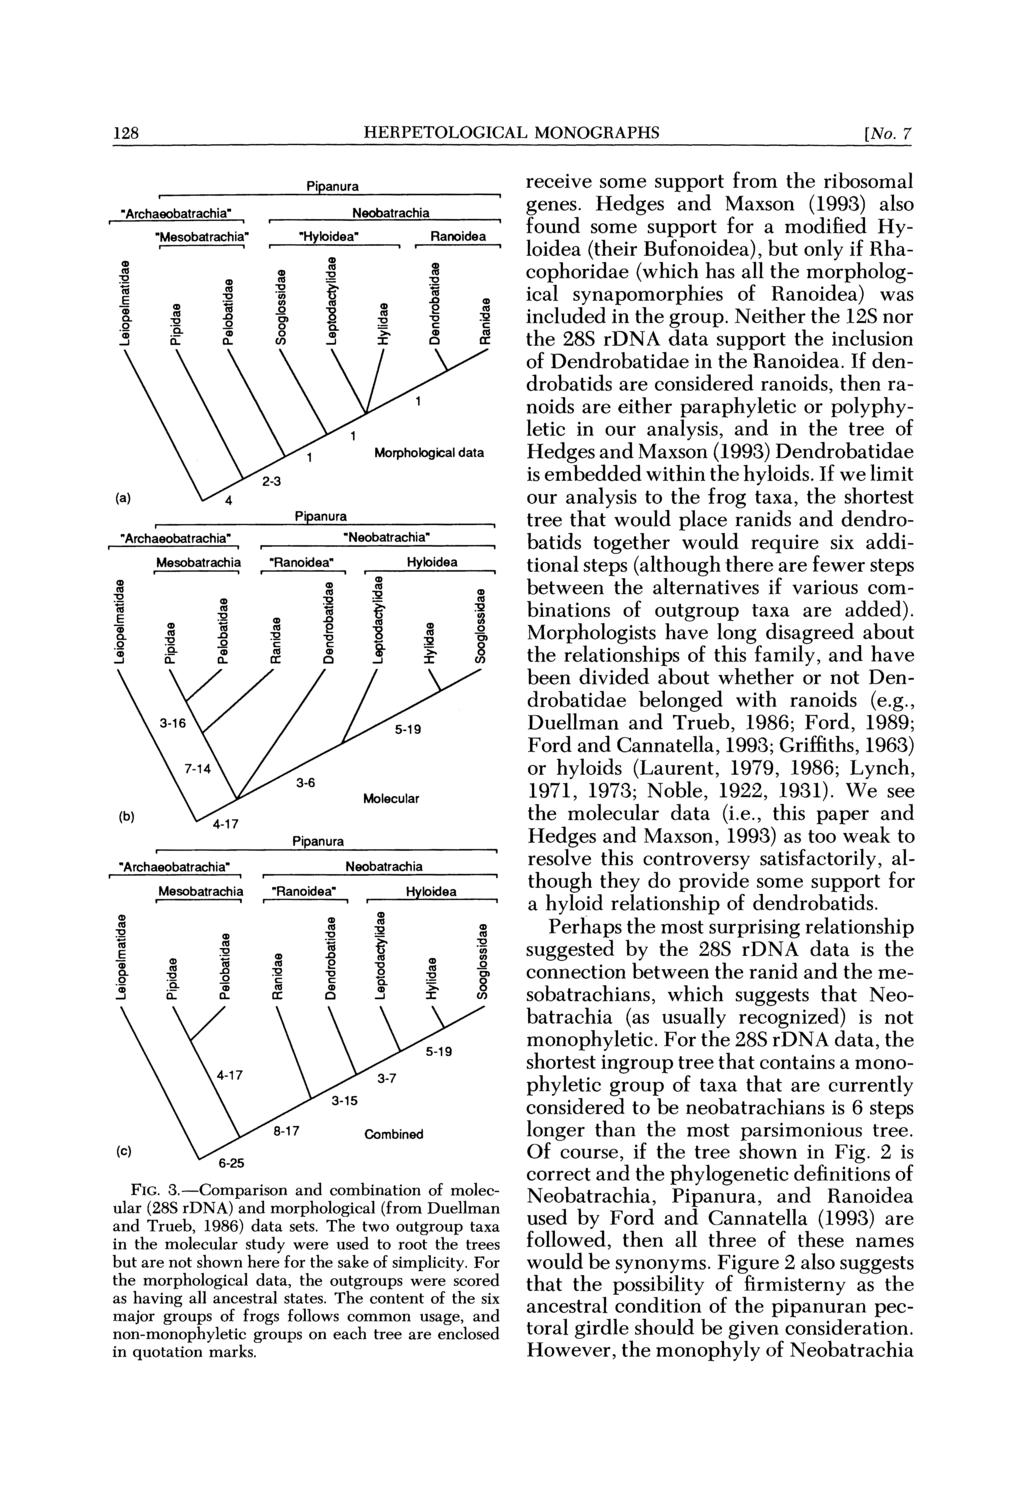 128 HERPETOLOGICAL MONOGRAPHS [No. 7 "Archaeobatrachia" Pipanura Neobatrachia "Mesobatrachia" "Hyloidea" oidea I,.